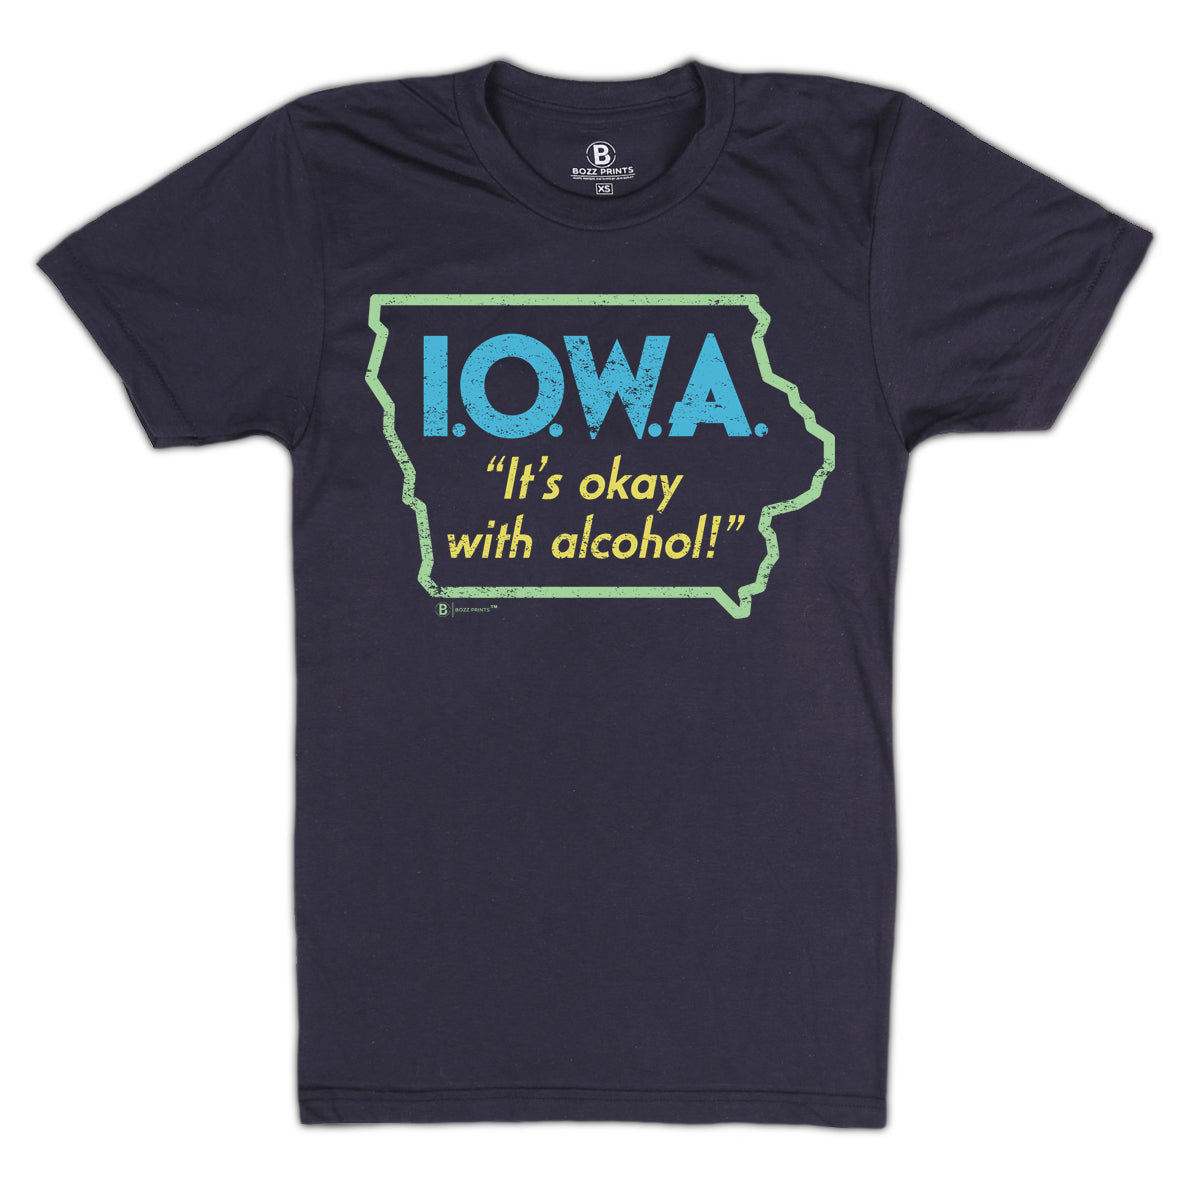 I.O.W.A. (It's Okay With Alcohol) Navy T-Shirt - Bozz Prints